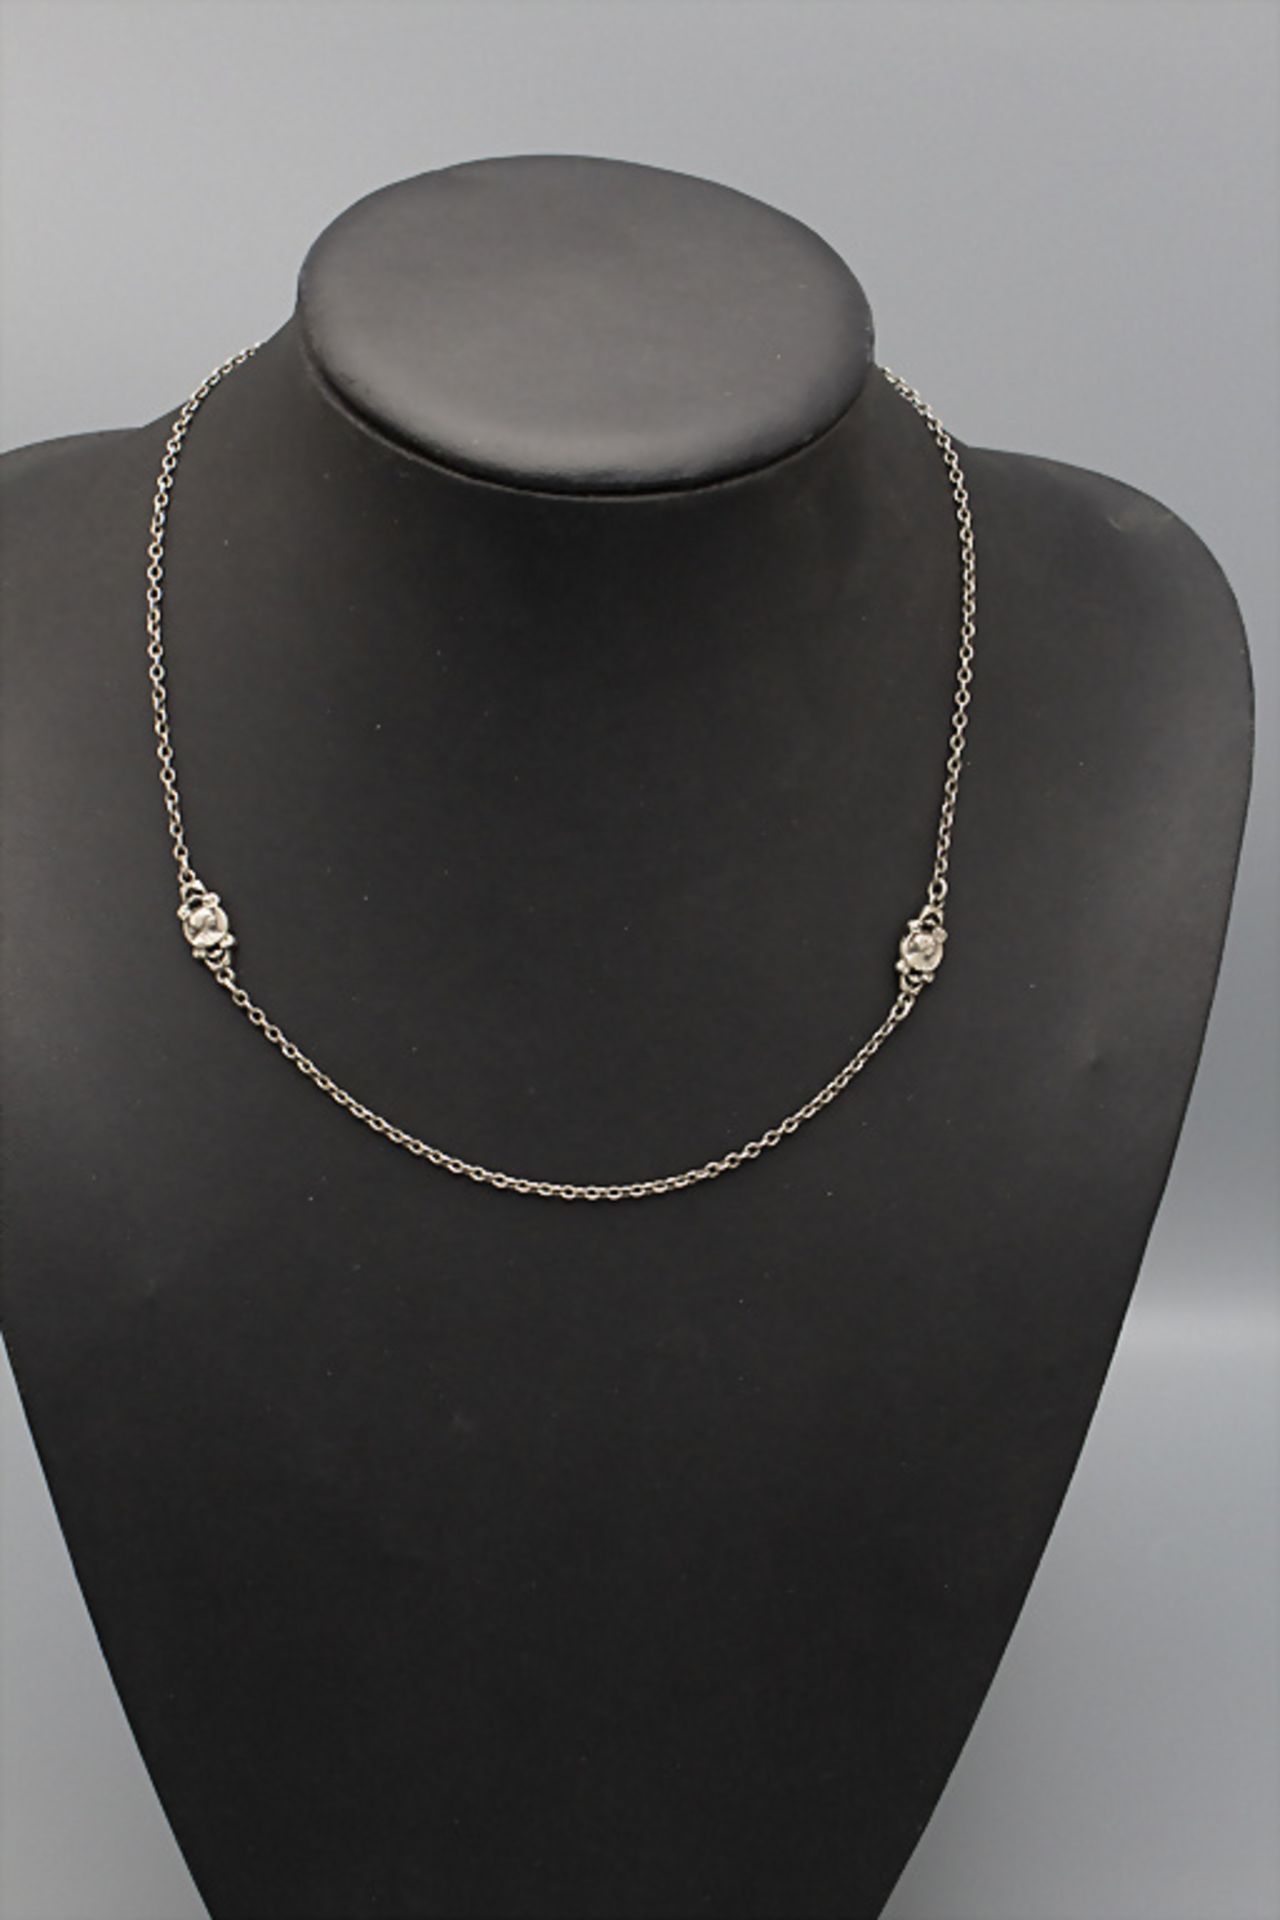 Jugendstil Silberkette mit 4 Medaillons / An Art Nouveau silver necklace with 4 medallions, ...